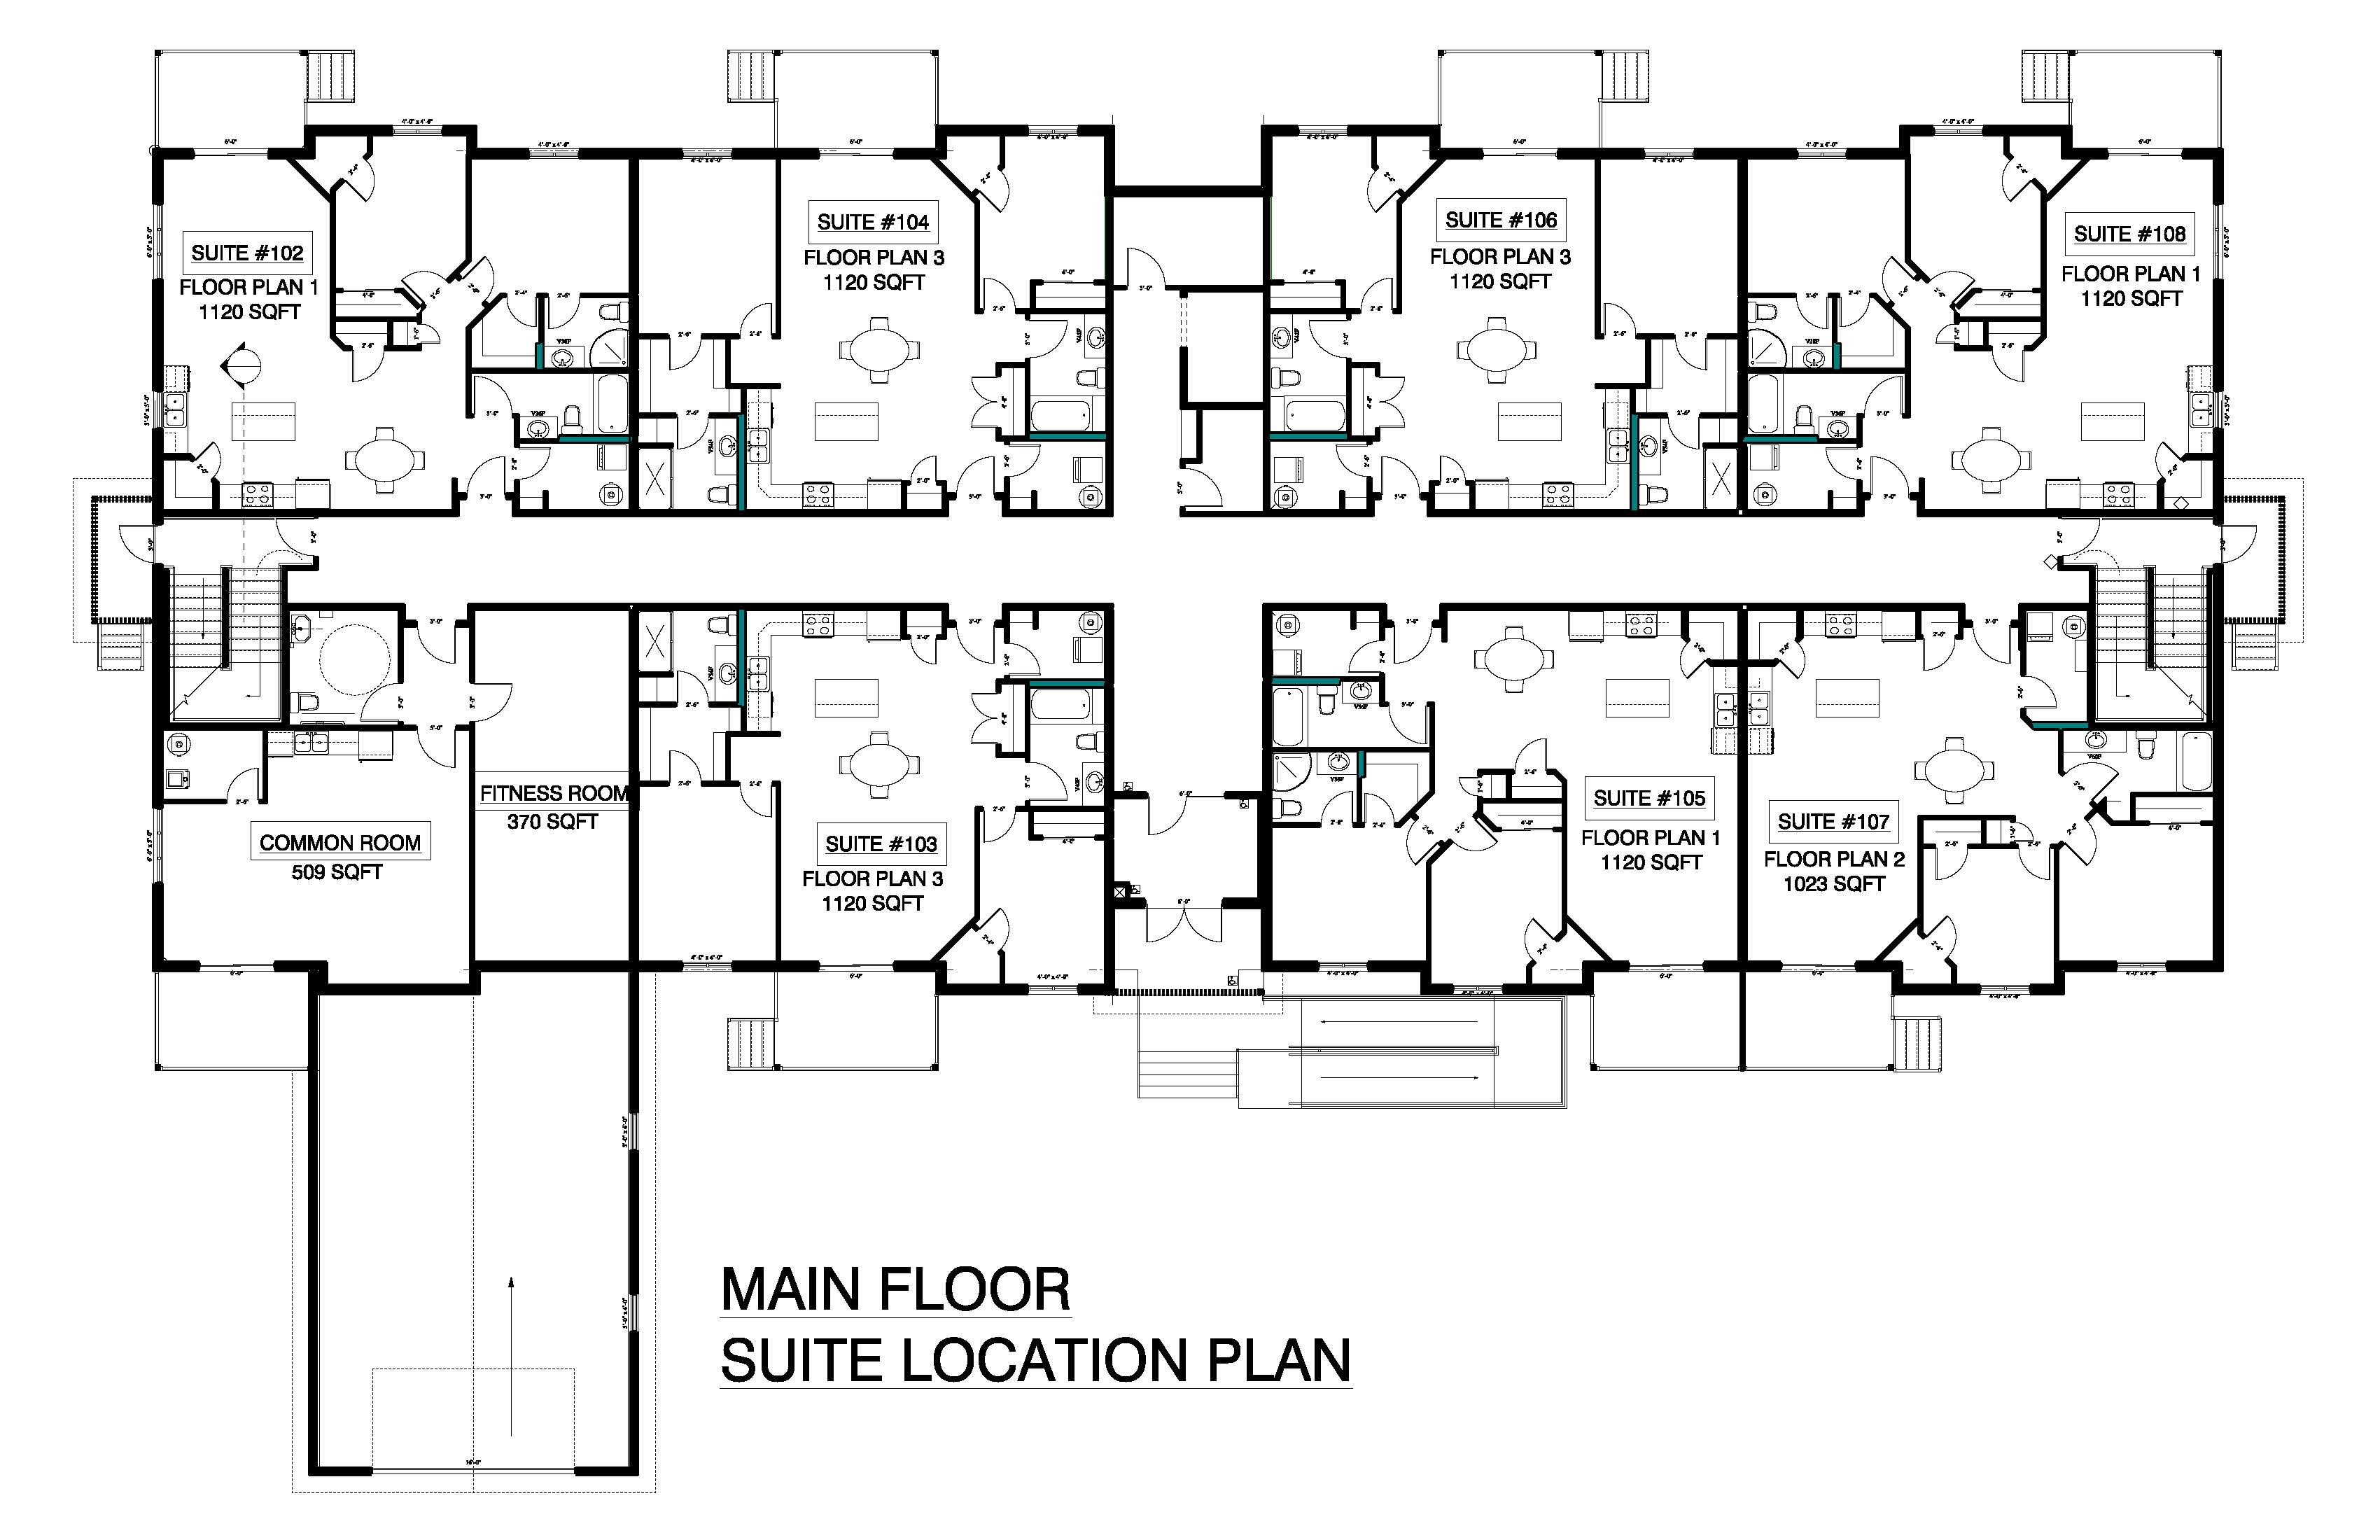 Main Floor Suite Location Plan